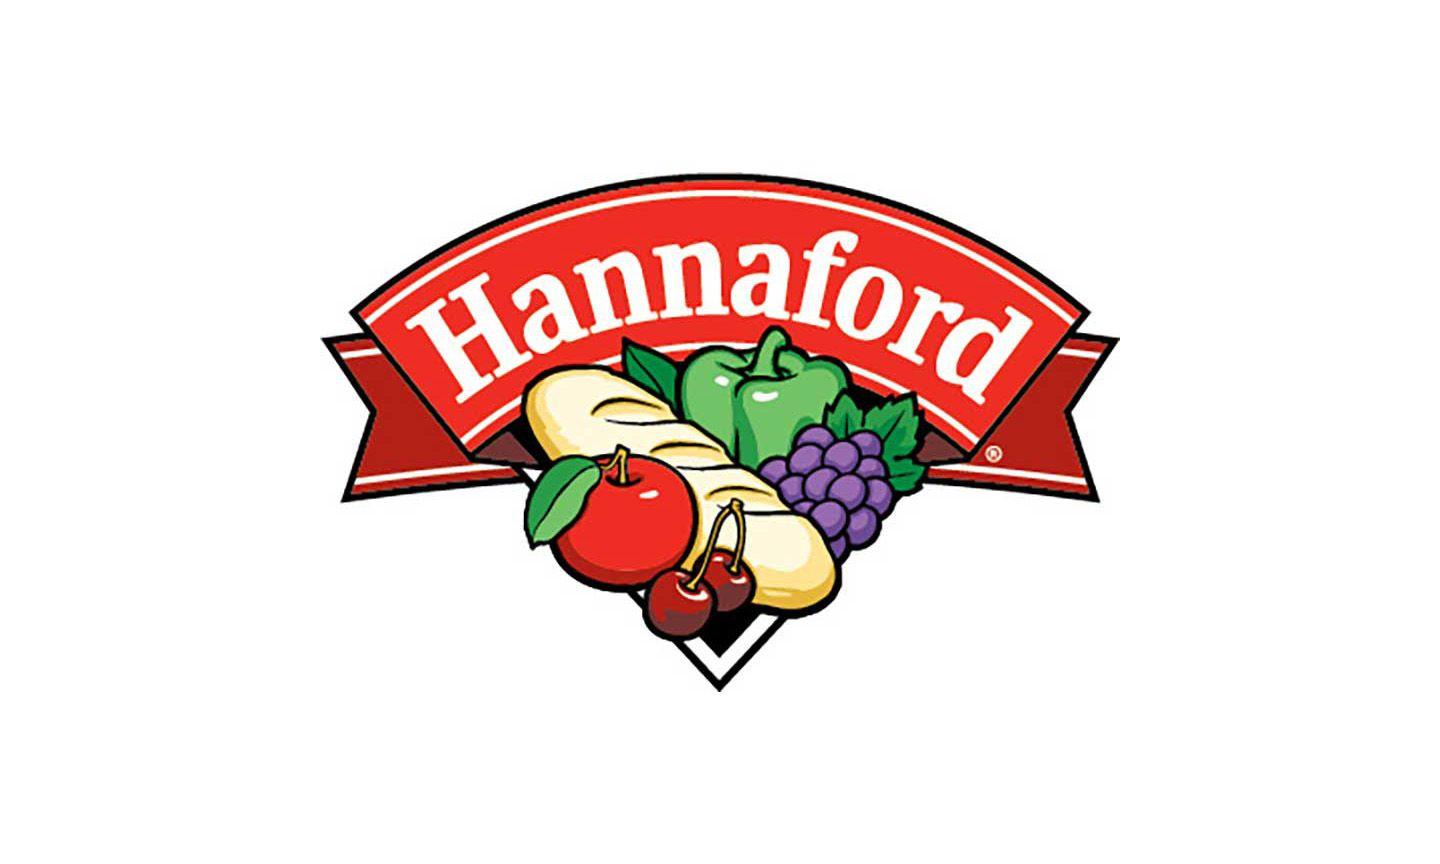 Mechanic Art Logo - Hannaford Bringing Full Service Store To Mechanic Falls, Maine